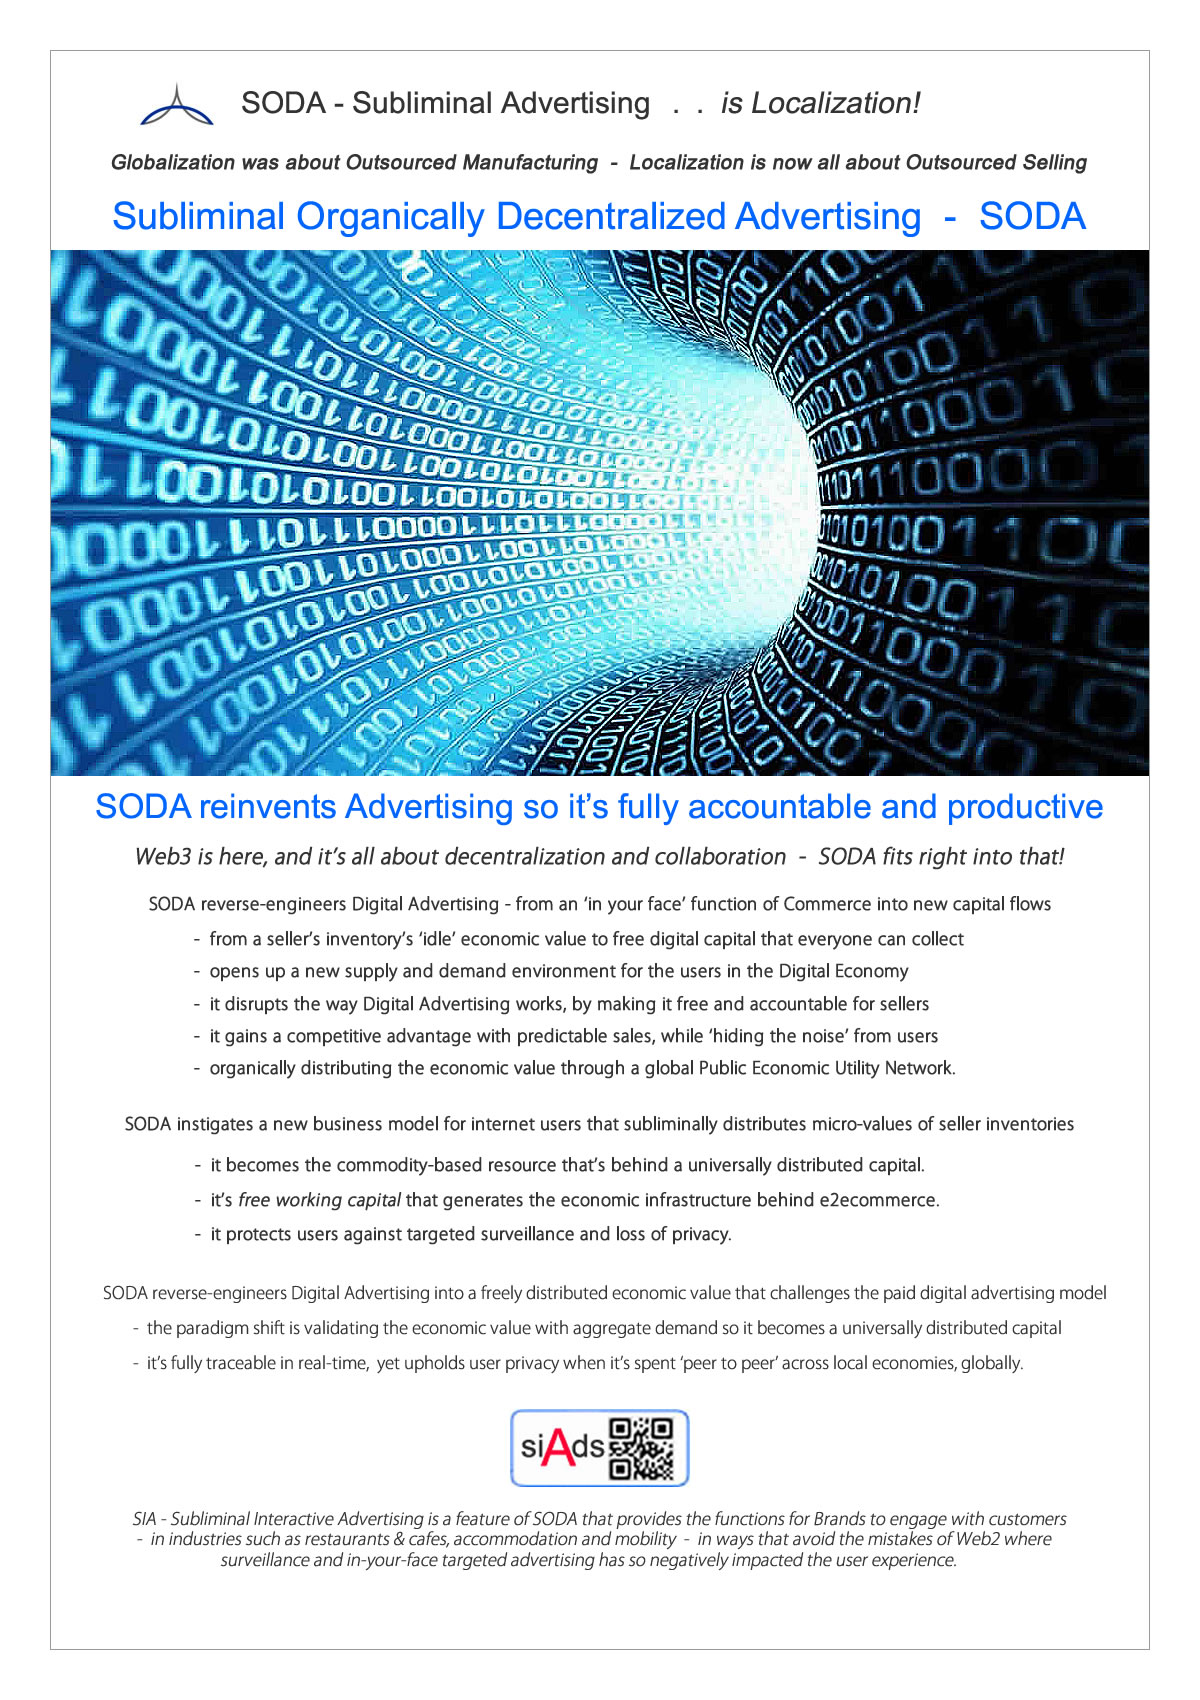 Strategy SODA - Subliminal Advertising